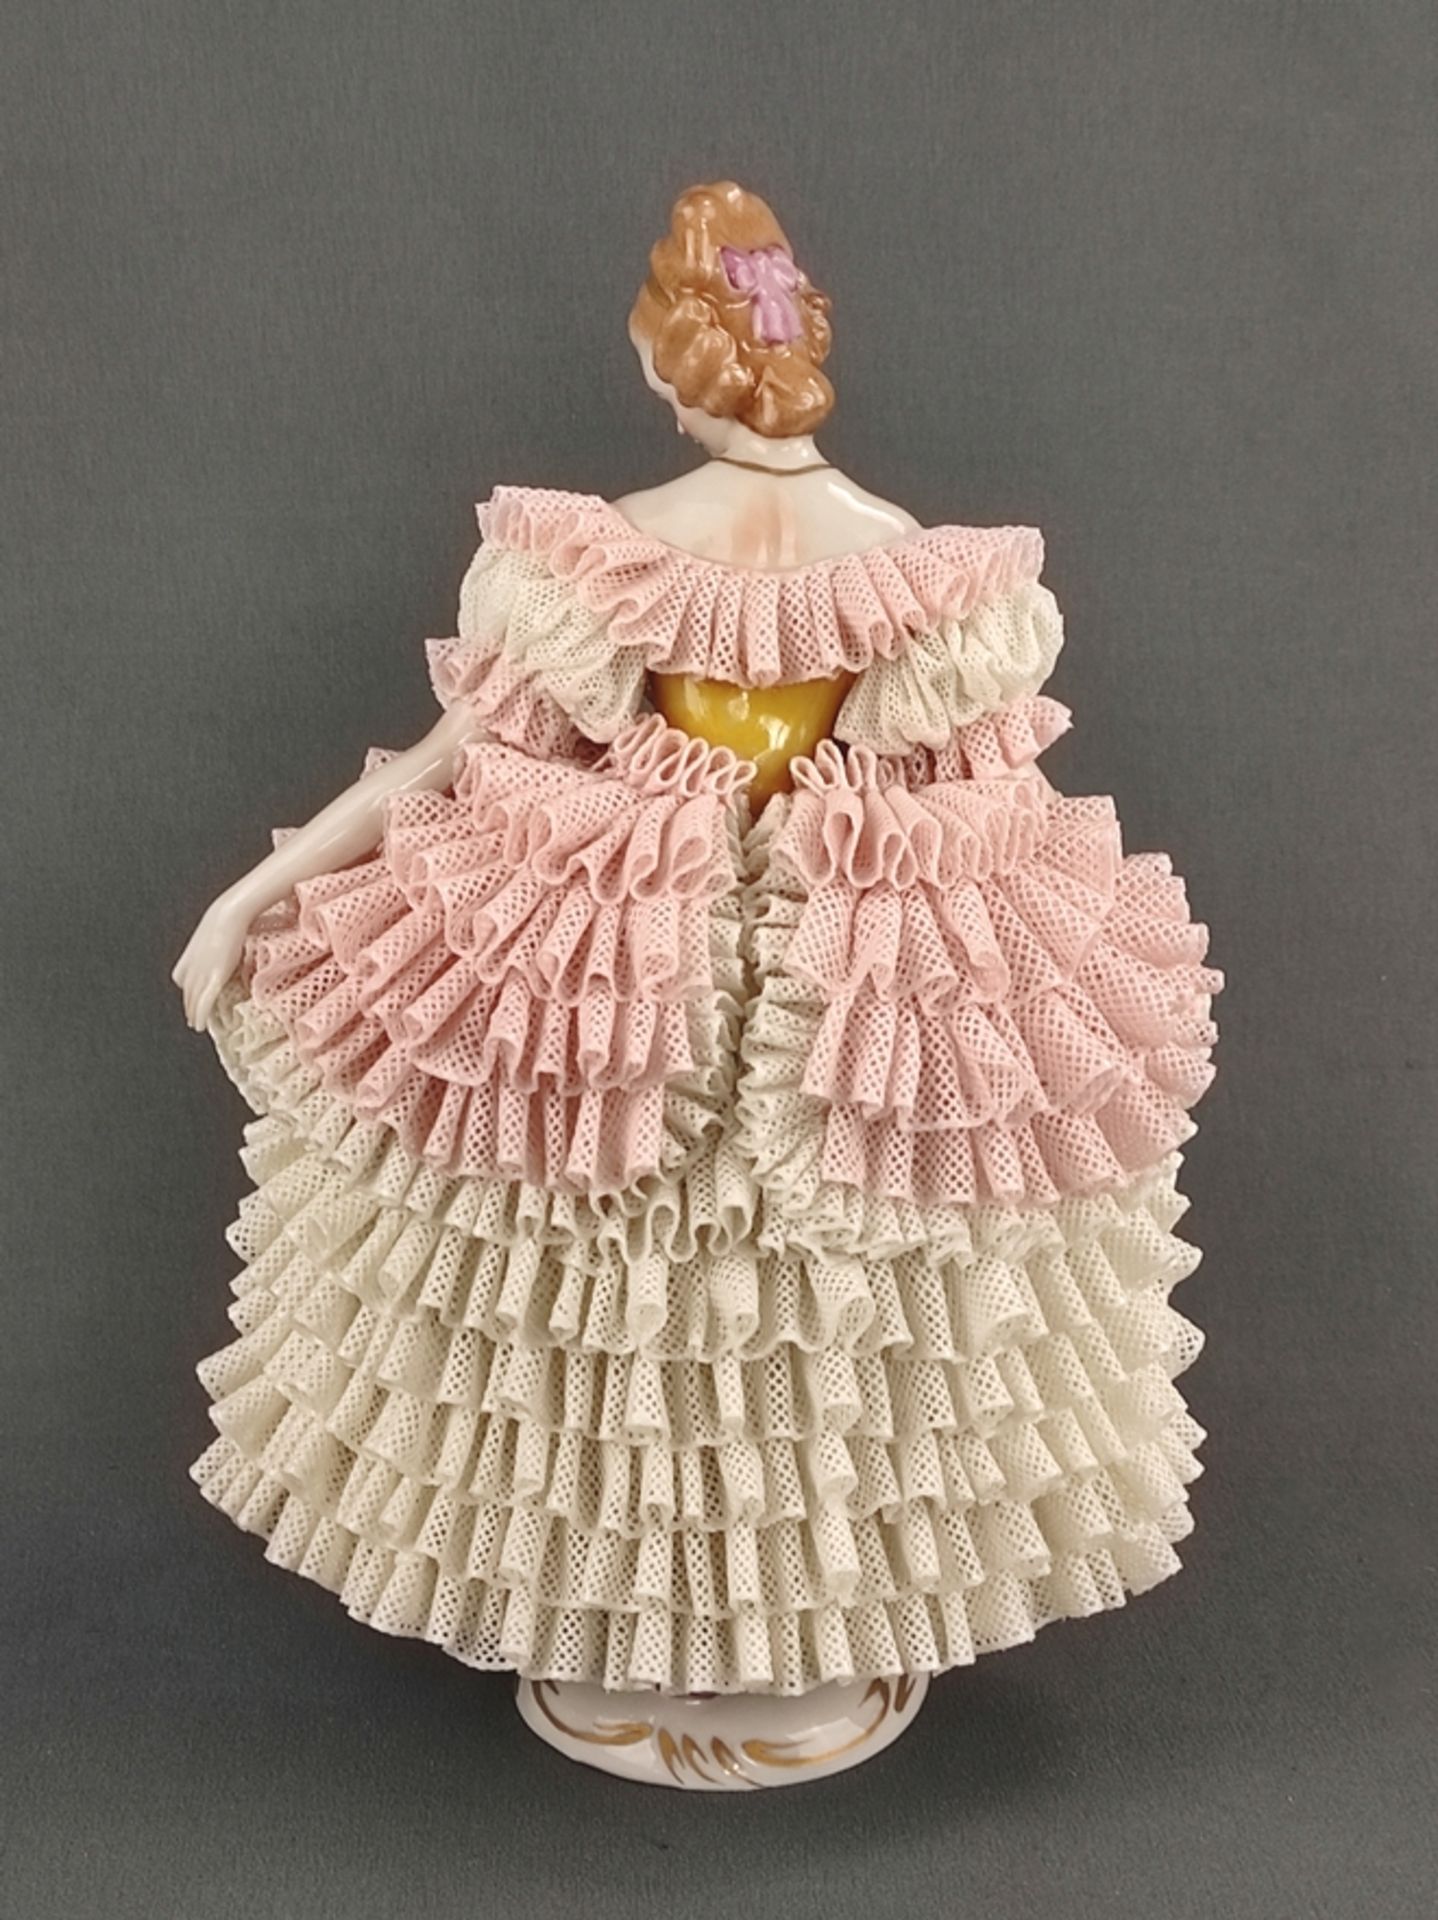 Dame im Tüllkleid, Sitzendorfer Porzellanmanufaktur, 20. Jahrhundert, junge Dame in voluminösem Tül - Bild 4 aus 7